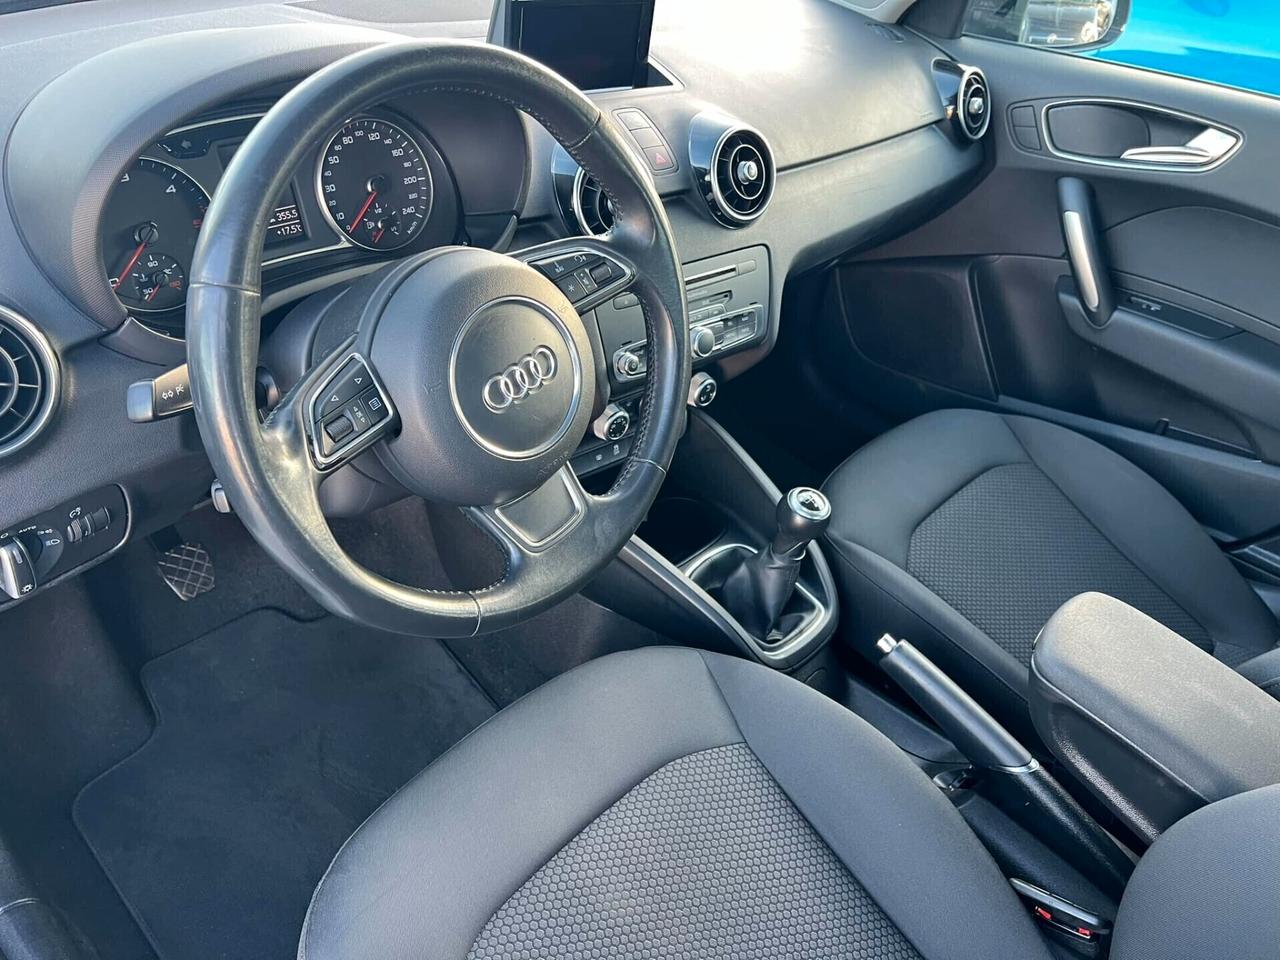 Audi A1 SPB 1.6 TDI 116 CV Admired -2018